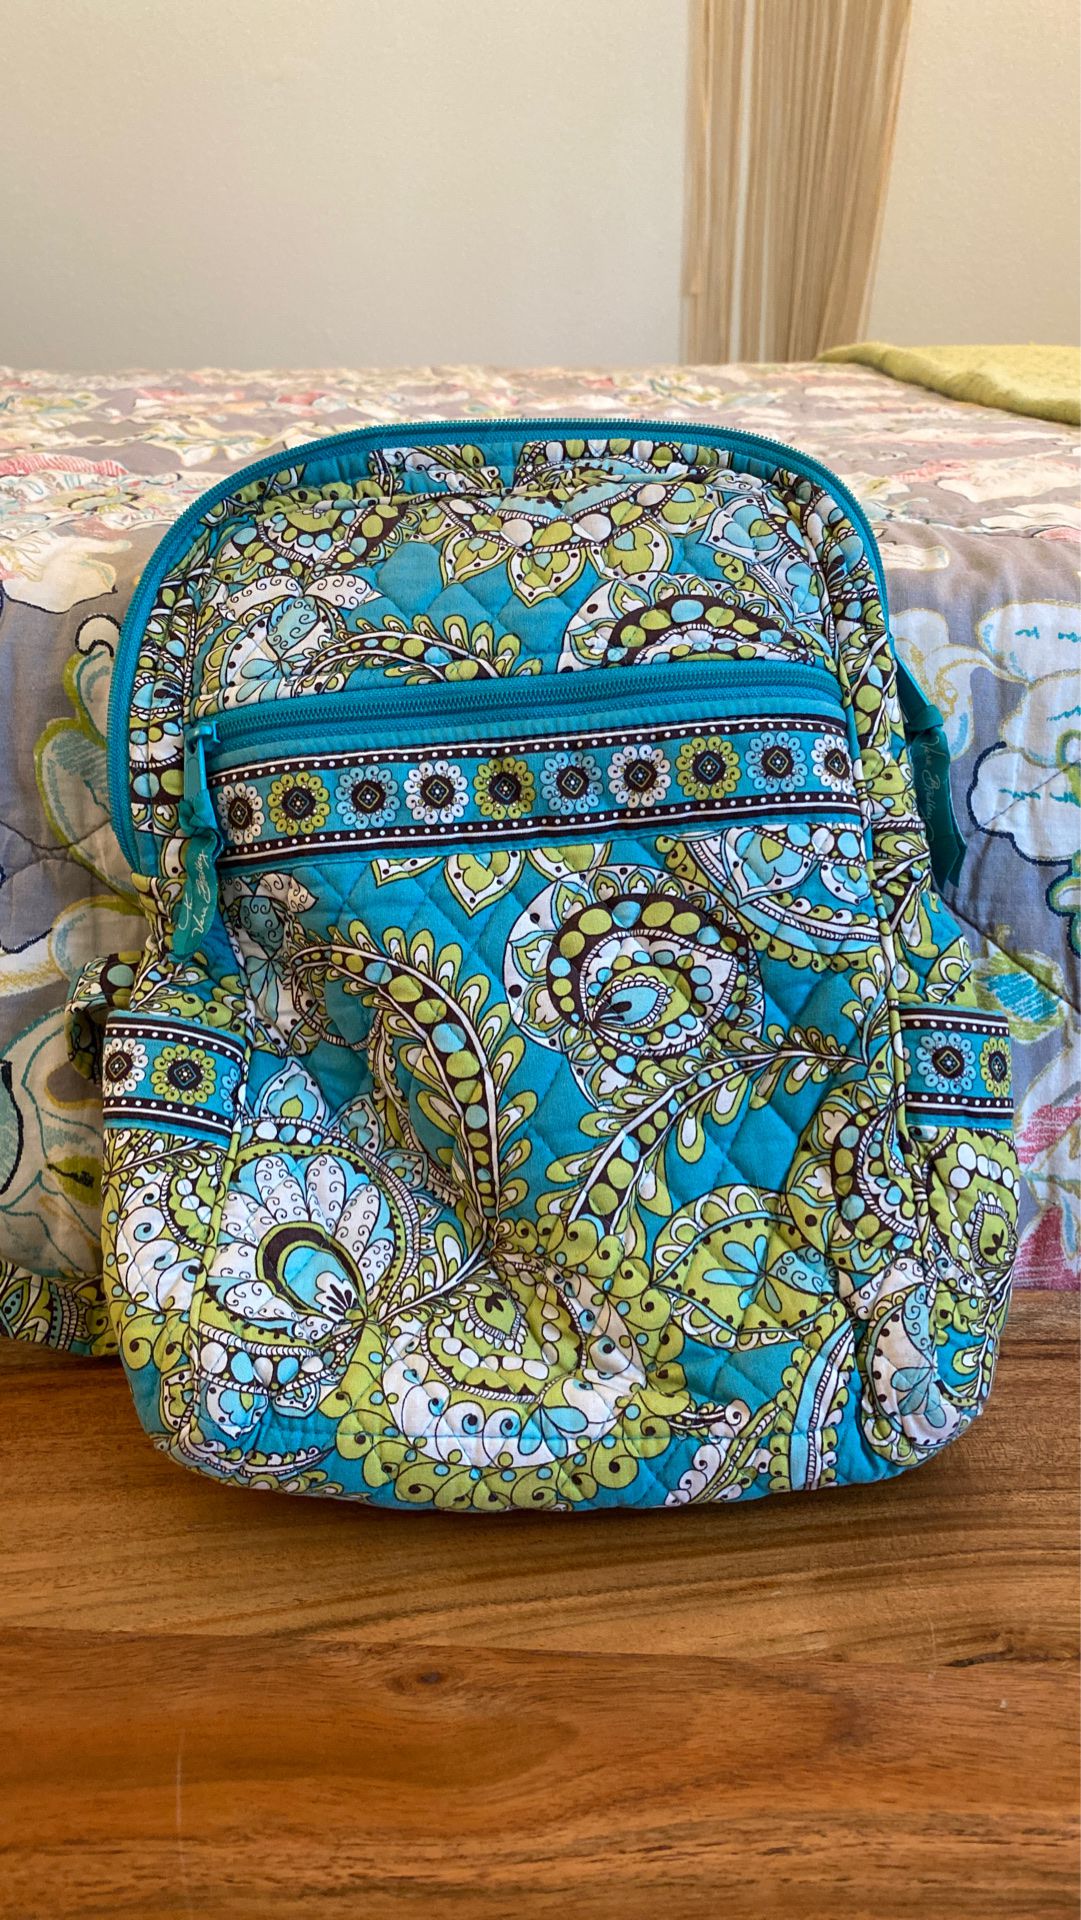 Vera Bradley backpack purse